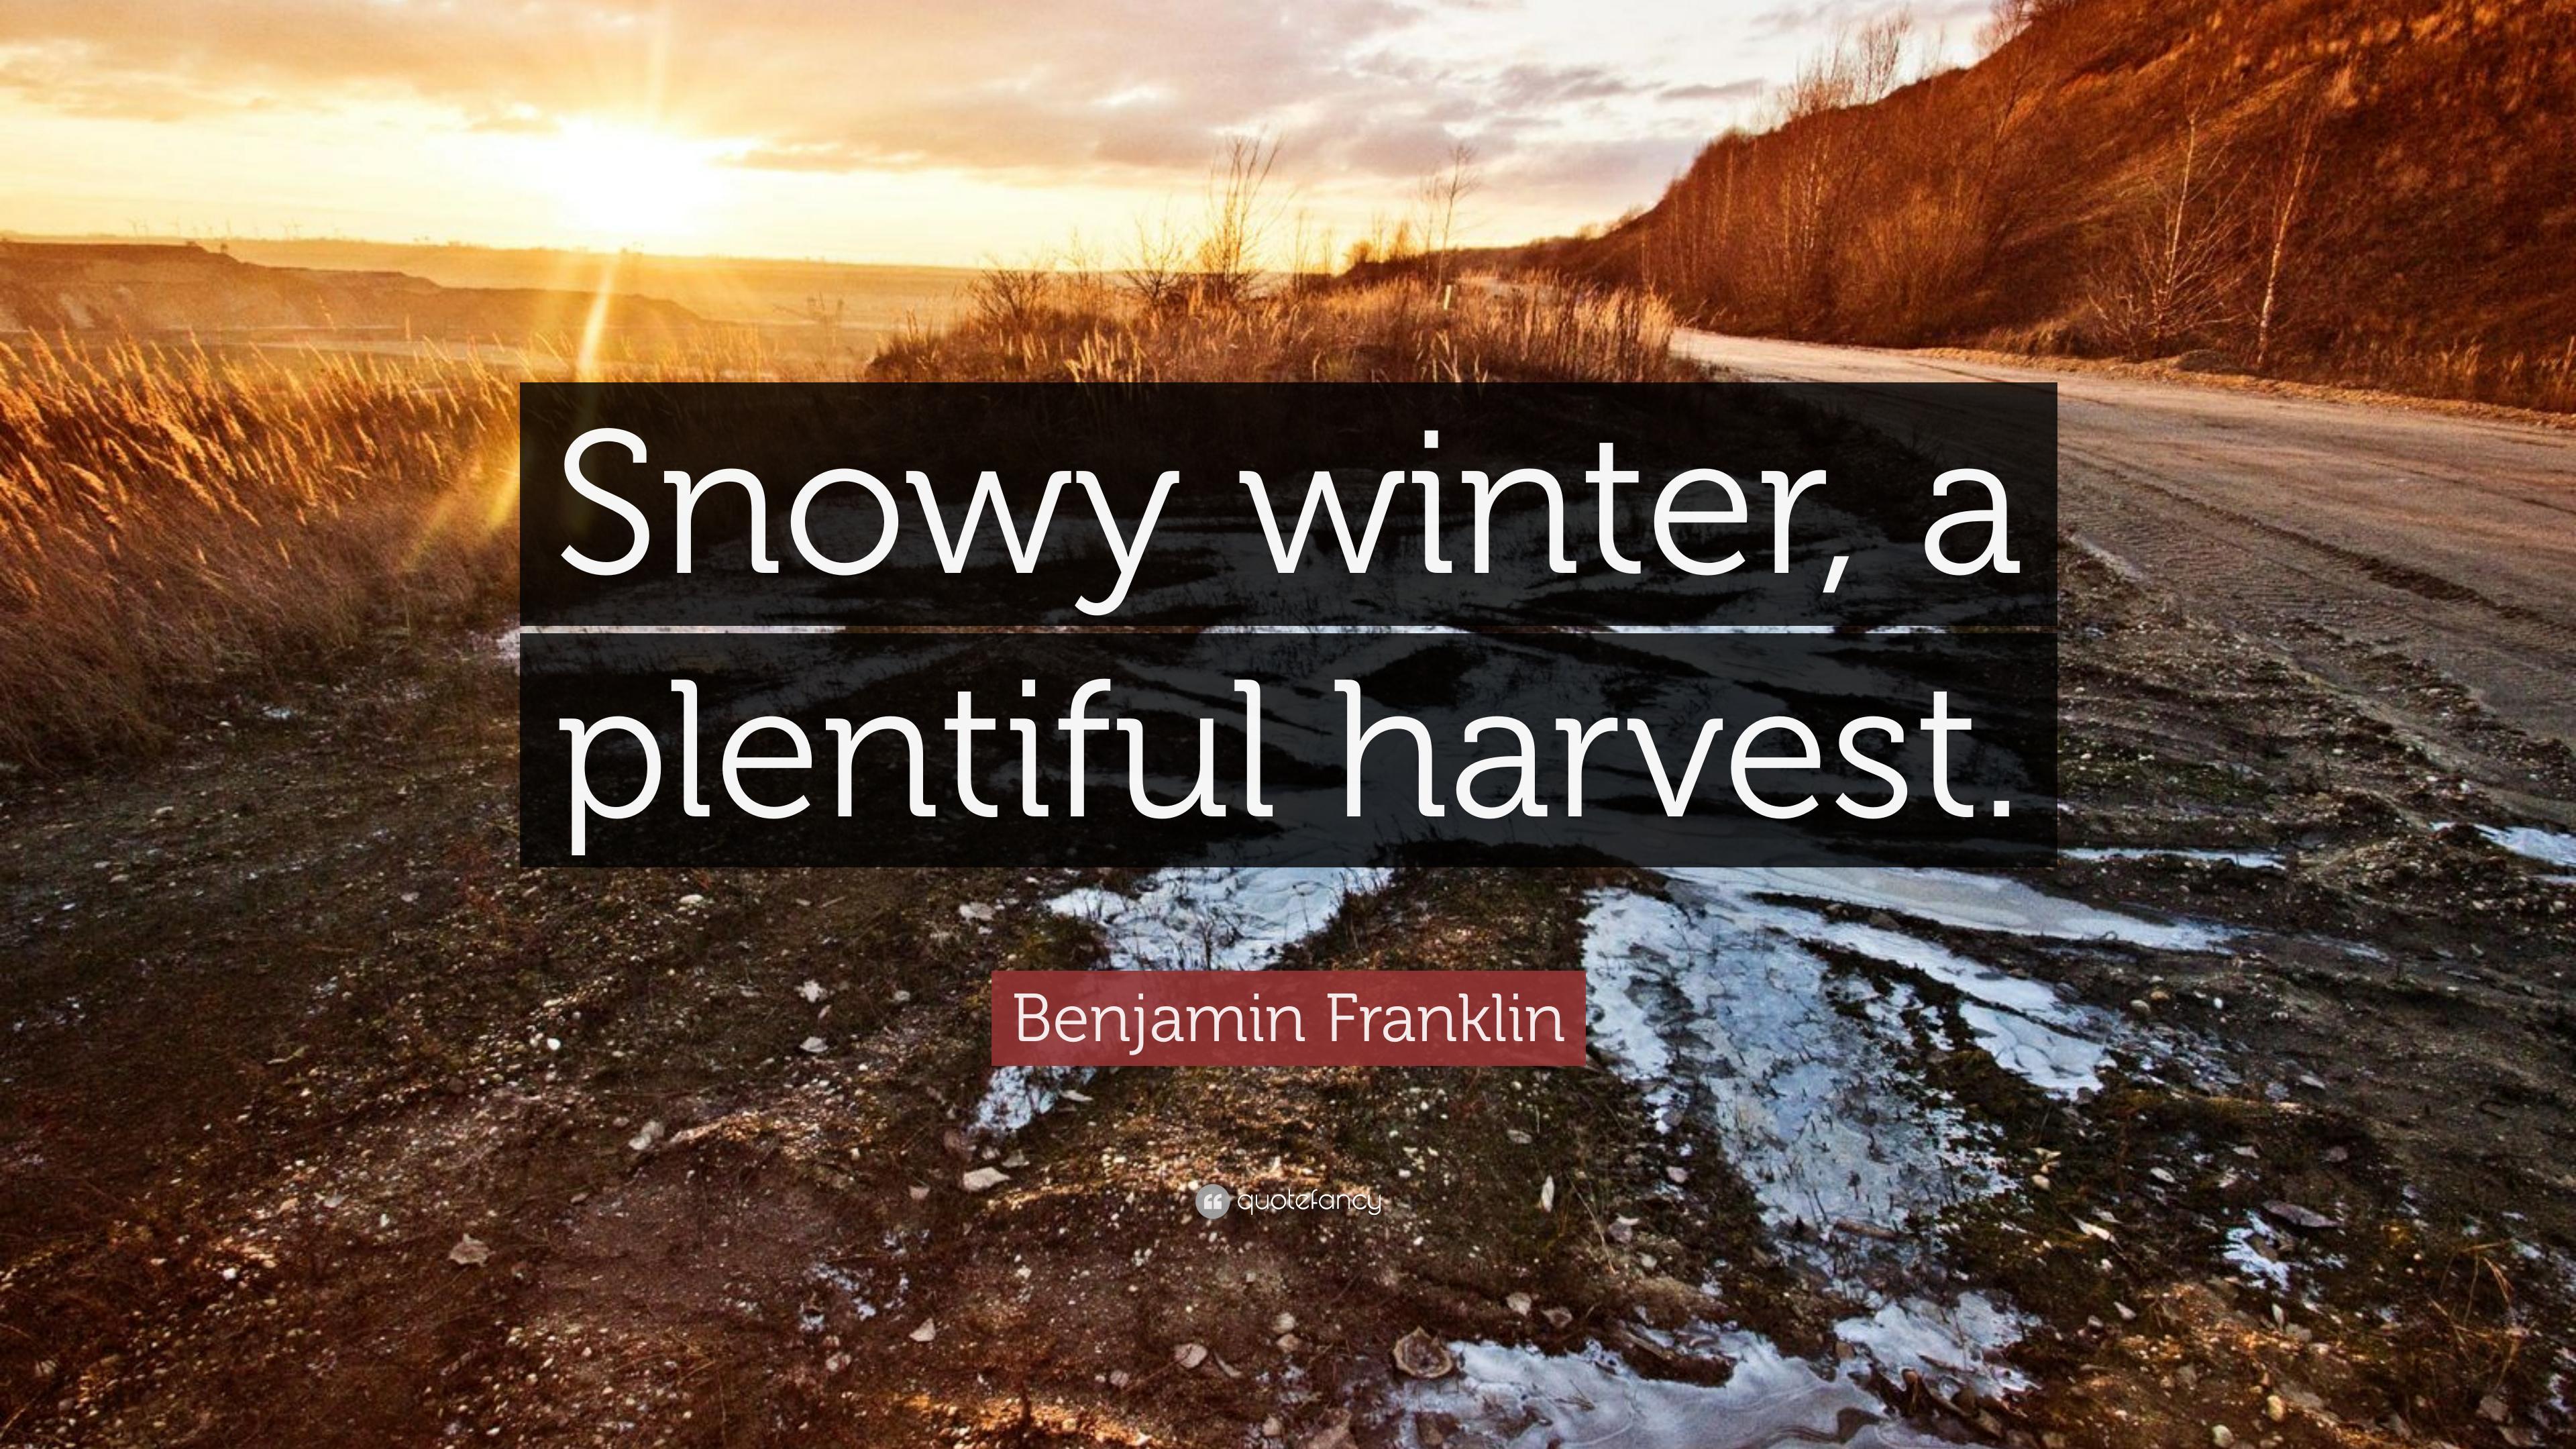 Benjamin Franklin Quote: “Snowy winter, a plentiful harvest